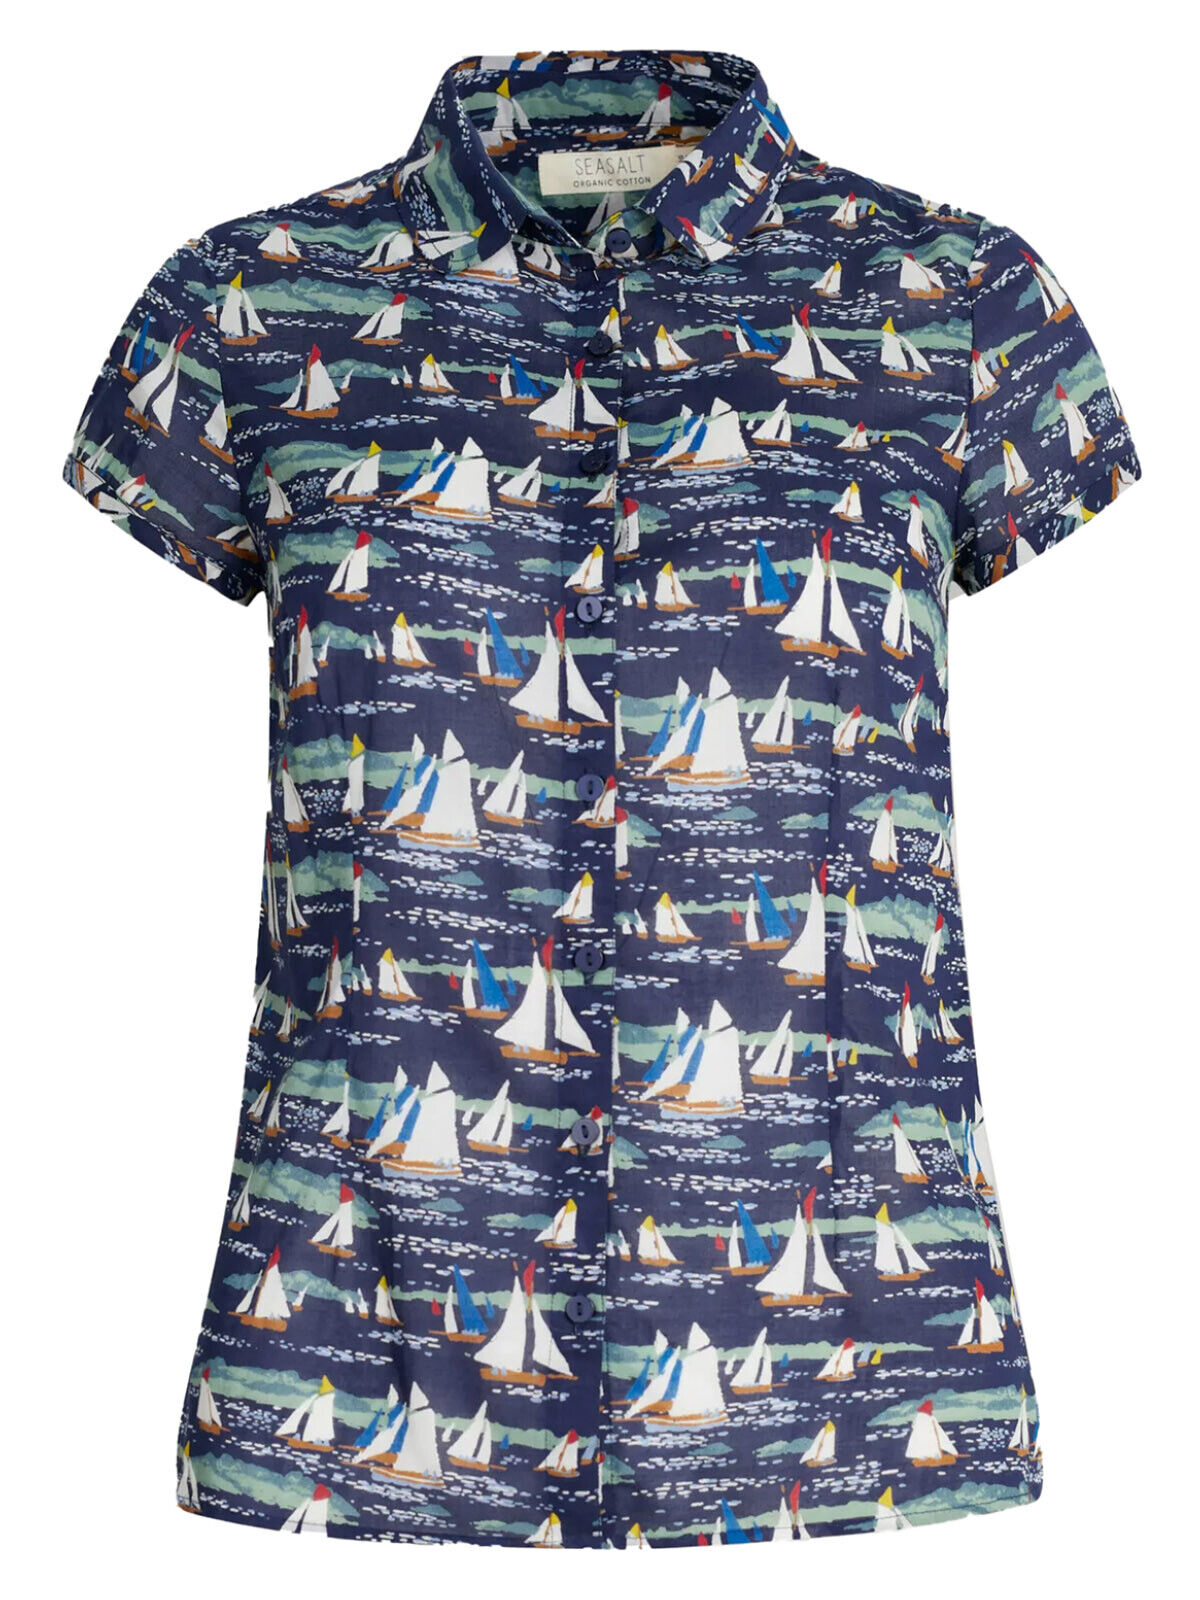 EX Seasalt Navy Rushmaker Shirt Lamorna Sail Waterline 10, 12, 14, 16, 18, 20